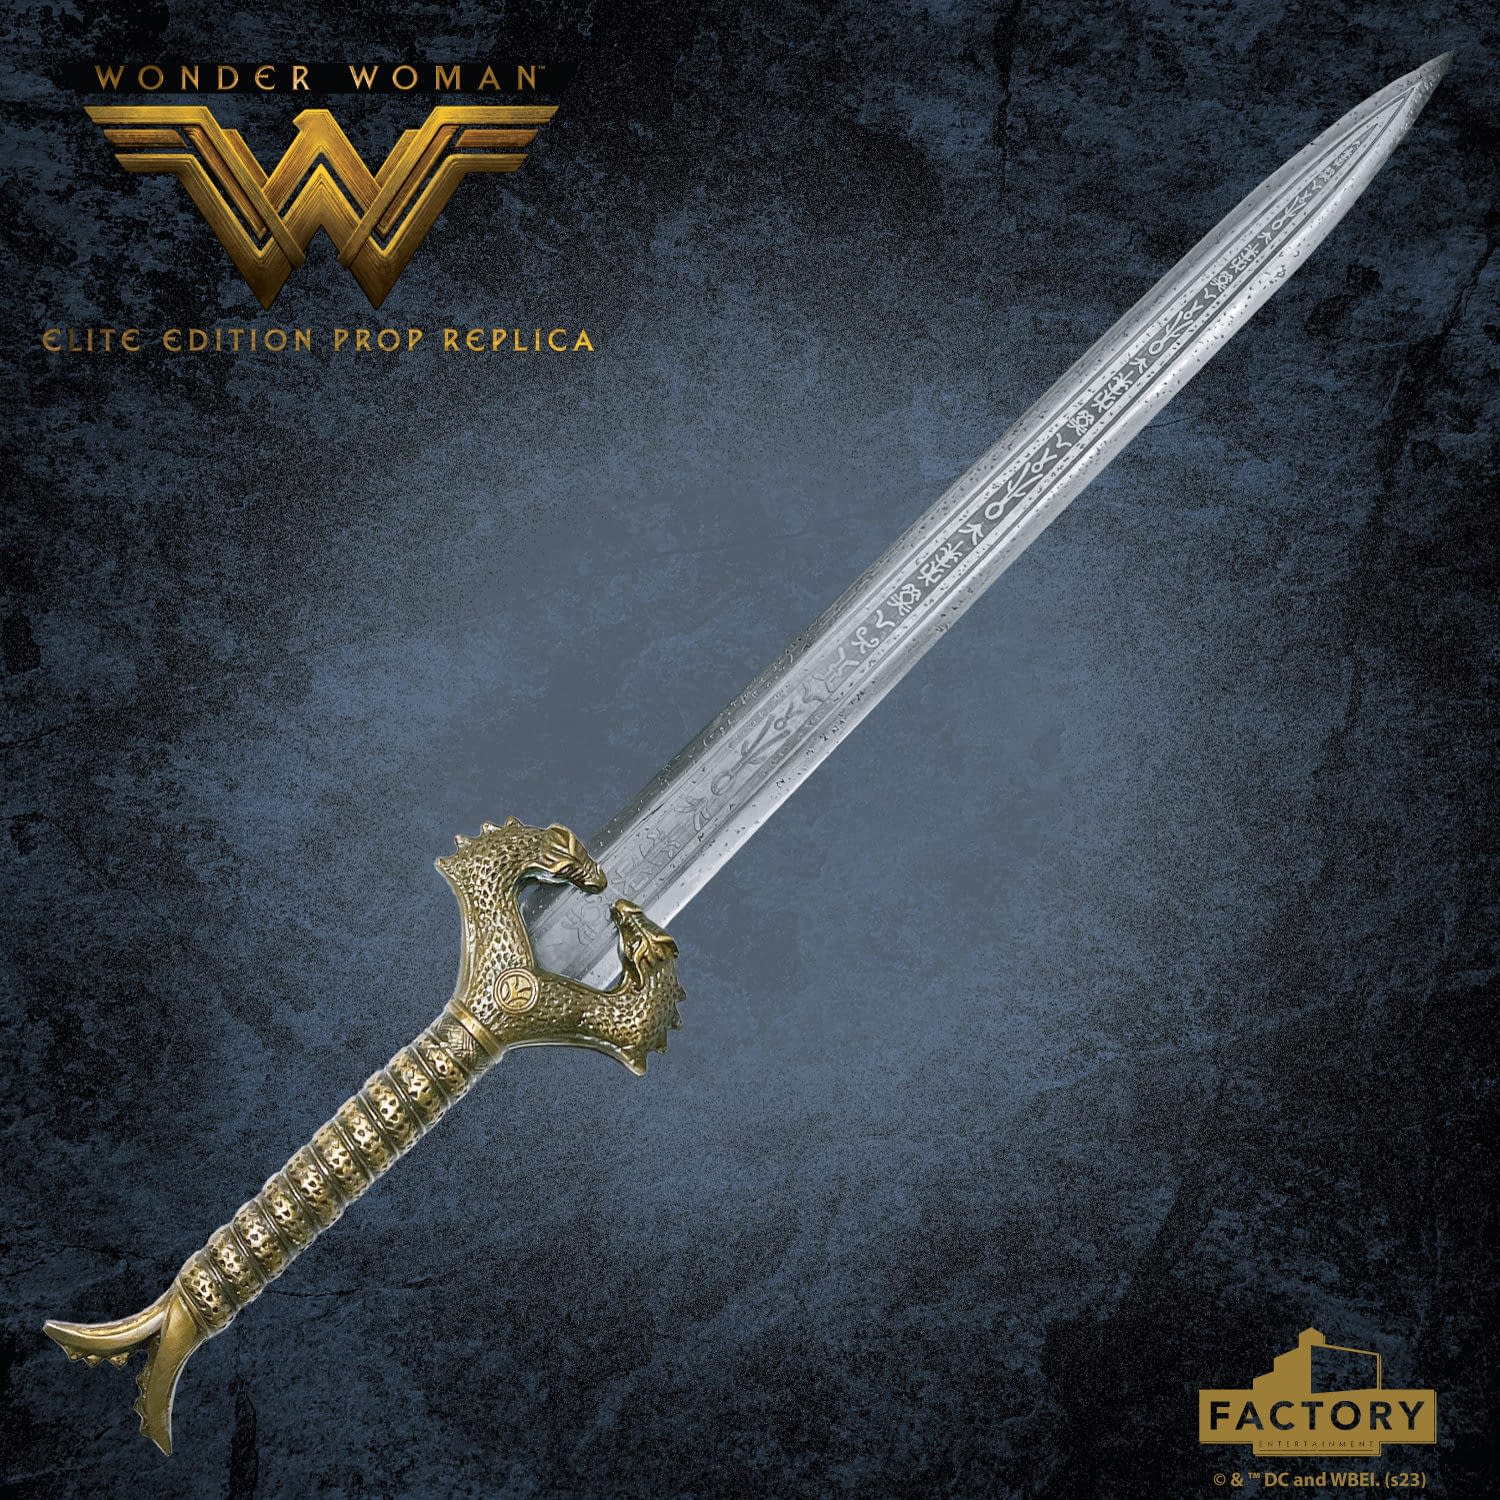 The Wonder Woman God Killer Sword Arrives from Factory Entertainment